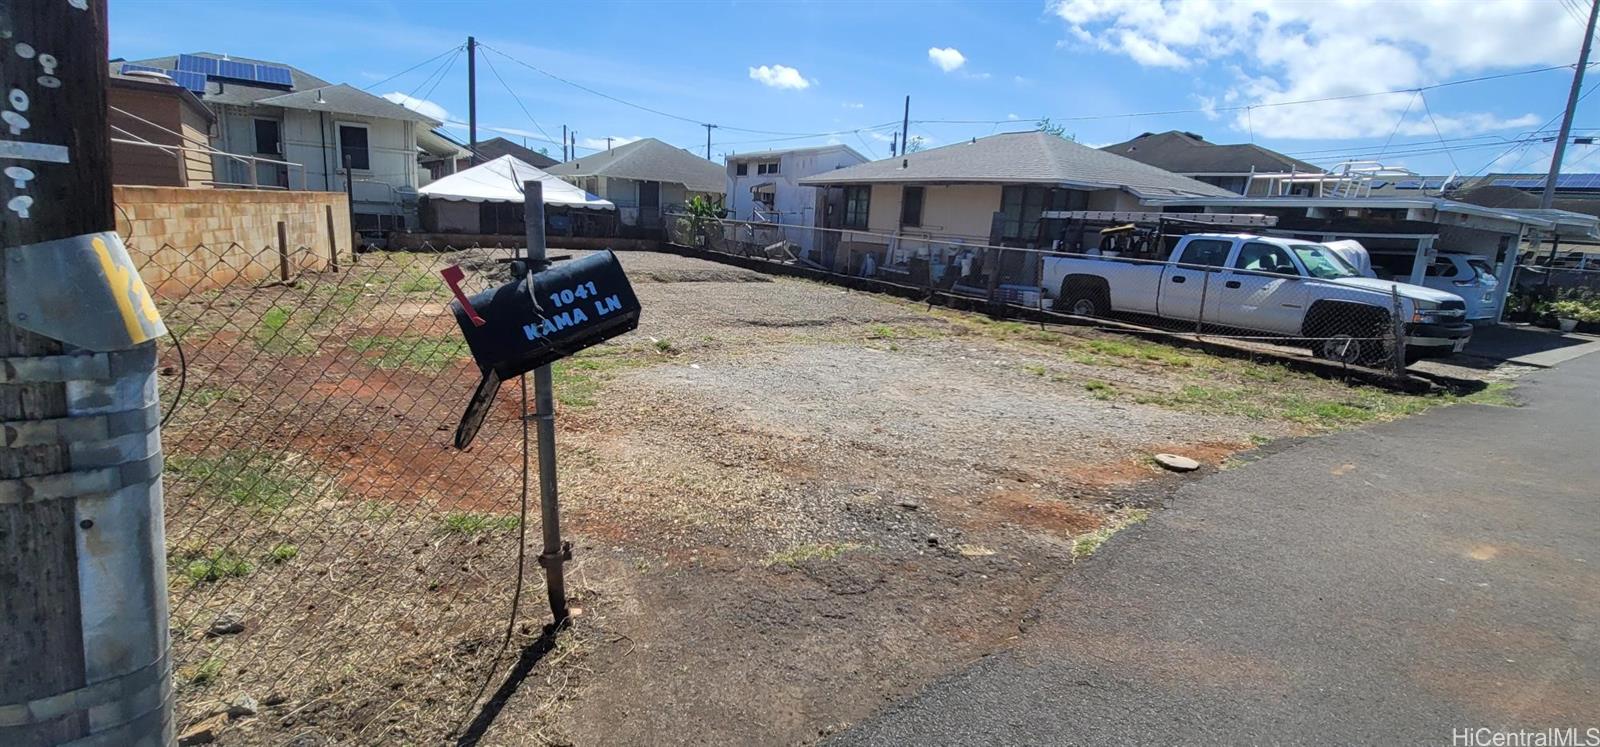 1041 Kama Lane  Honolulu, Hi vacant land for sale - photo 4 of 8